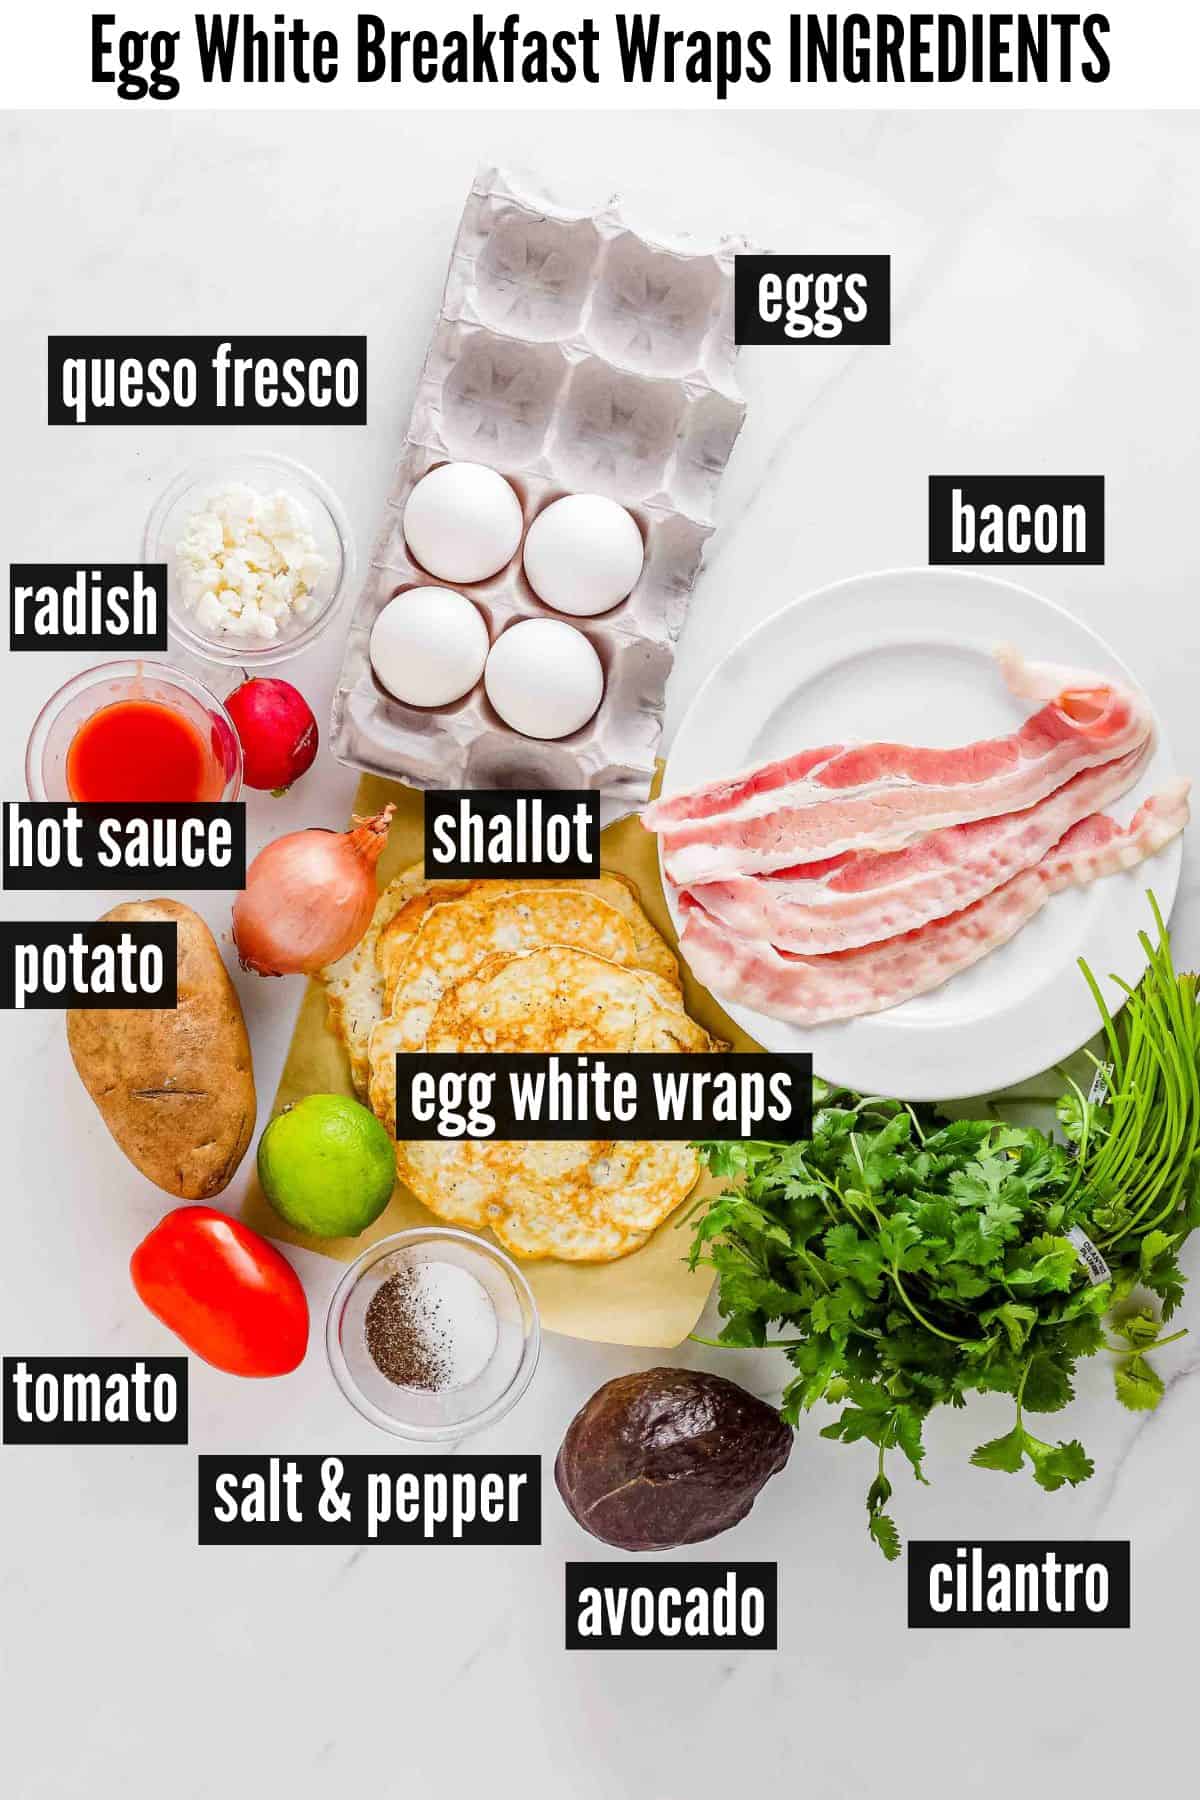 egg white breakfast wrap labelled ingredients